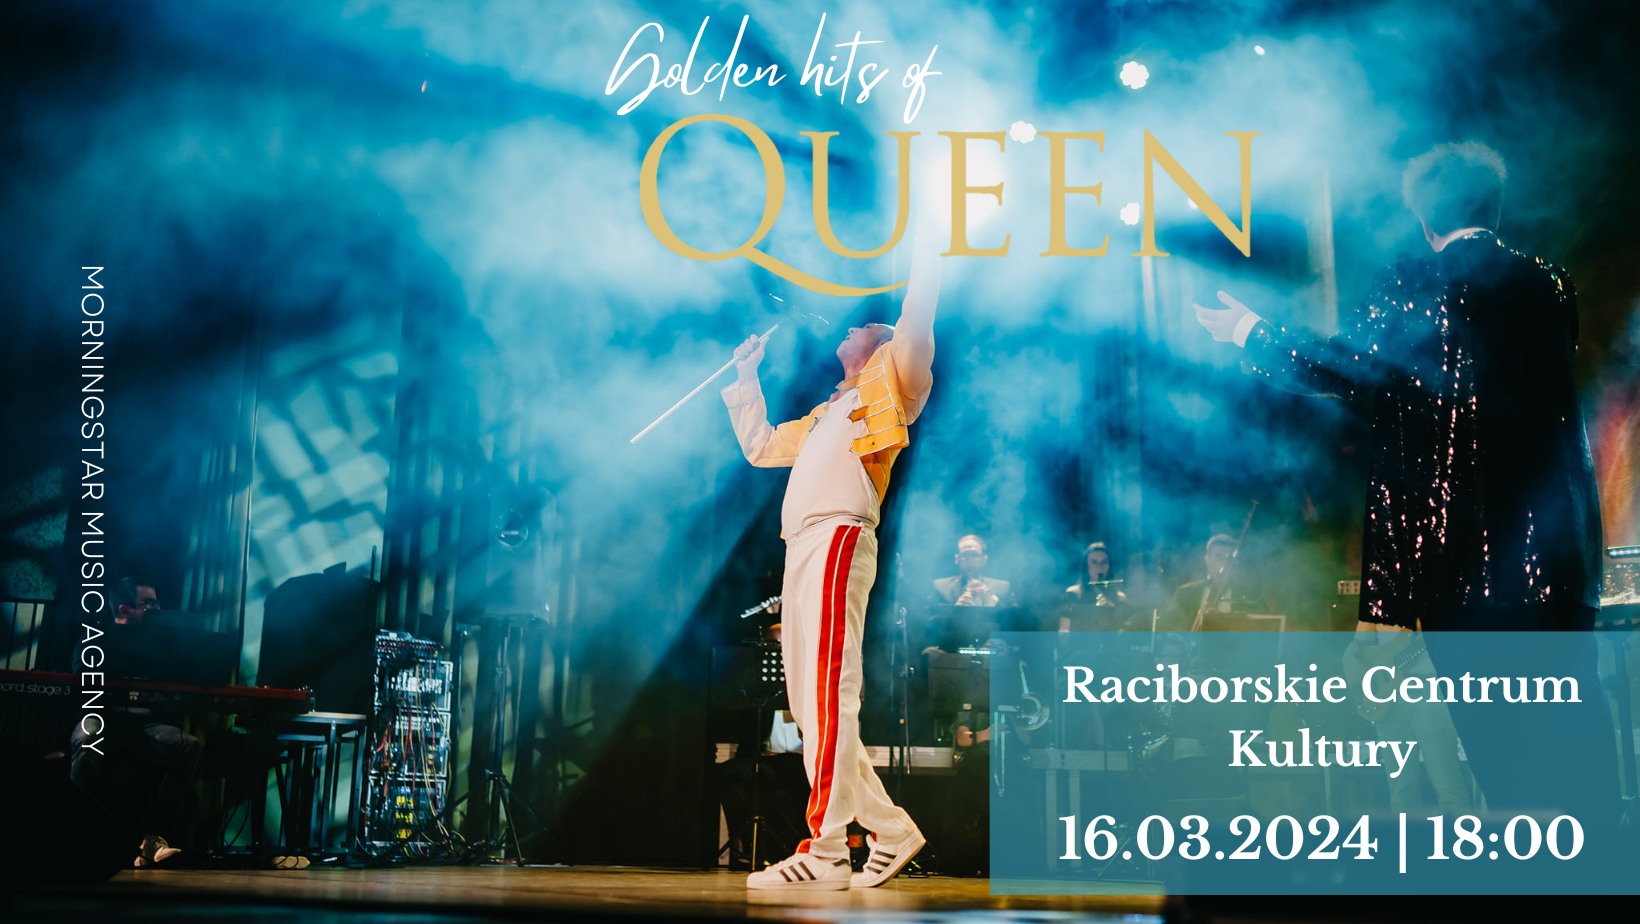 Golden hits of Queen z towarzyszeniem orkiestry już w sobotę w RCK